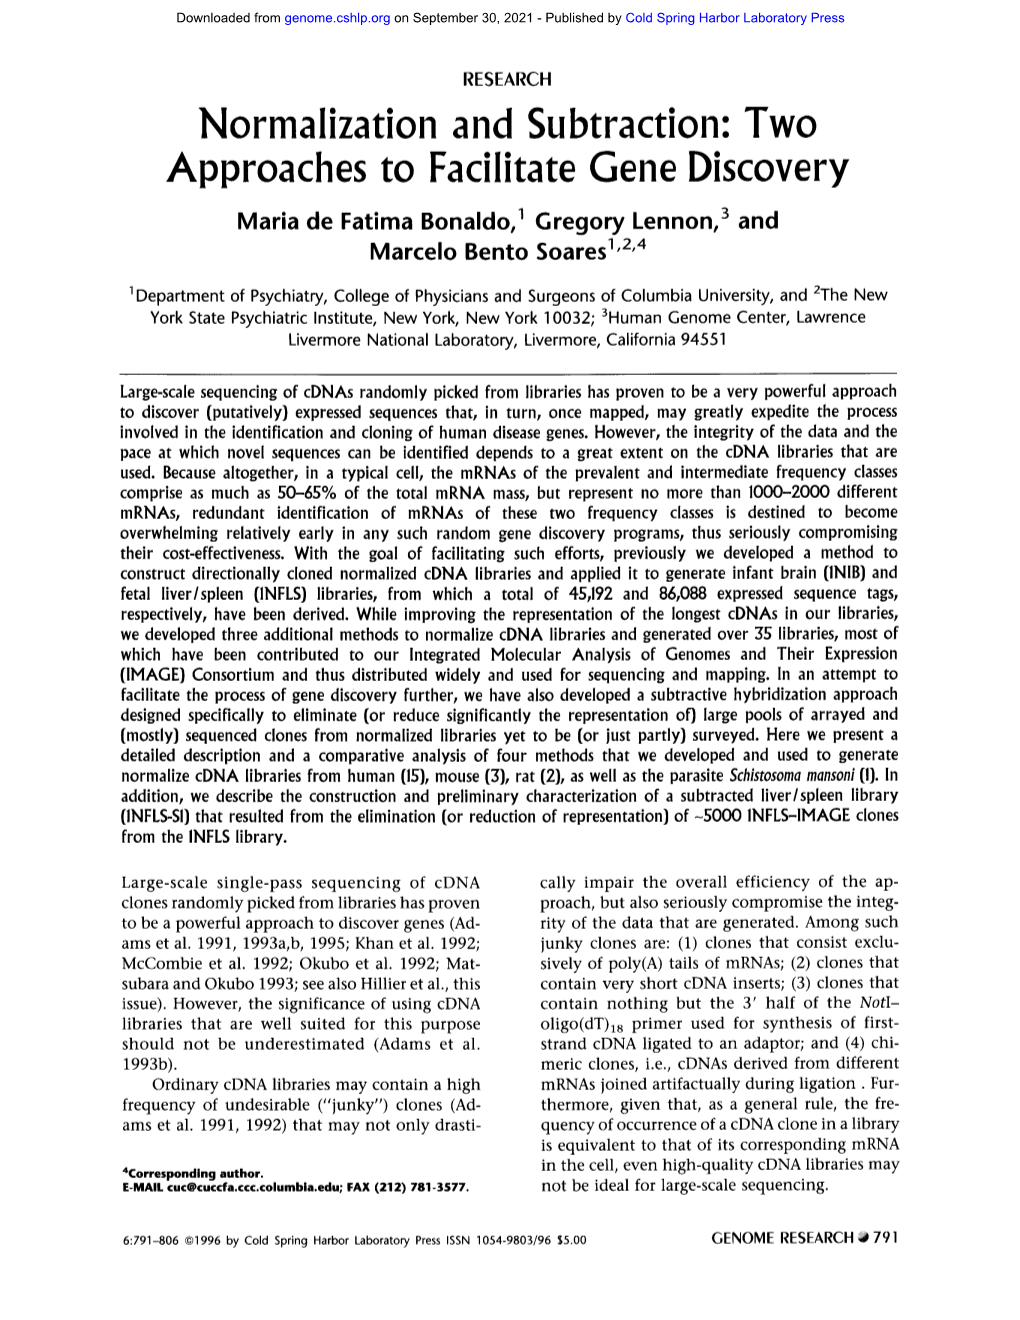 Normalization and Subtraction: Two Approaches to Facilitate Gene Discovery Maria De Fatima Bonaldo, 1 Gregory Lennon, 3 and Marcelo Bento Soares 1'2'4